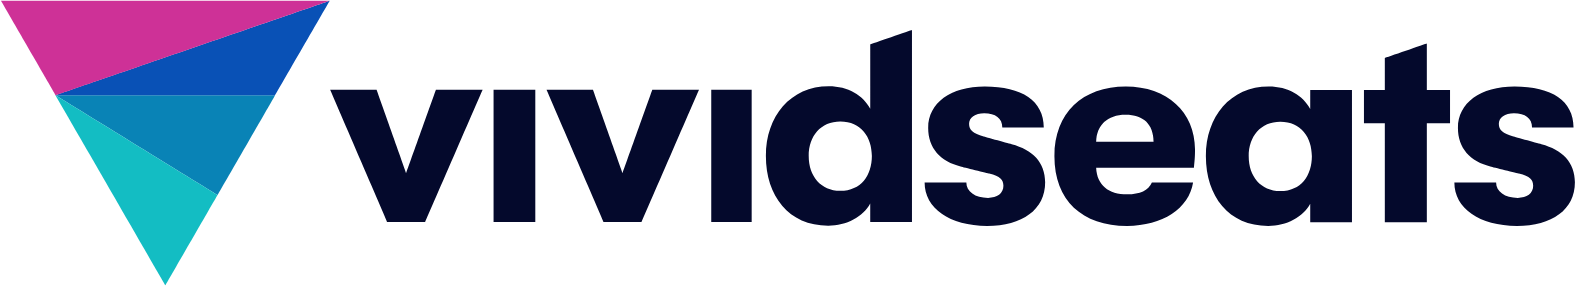 Vivid Seats logo large (transparent PNG)